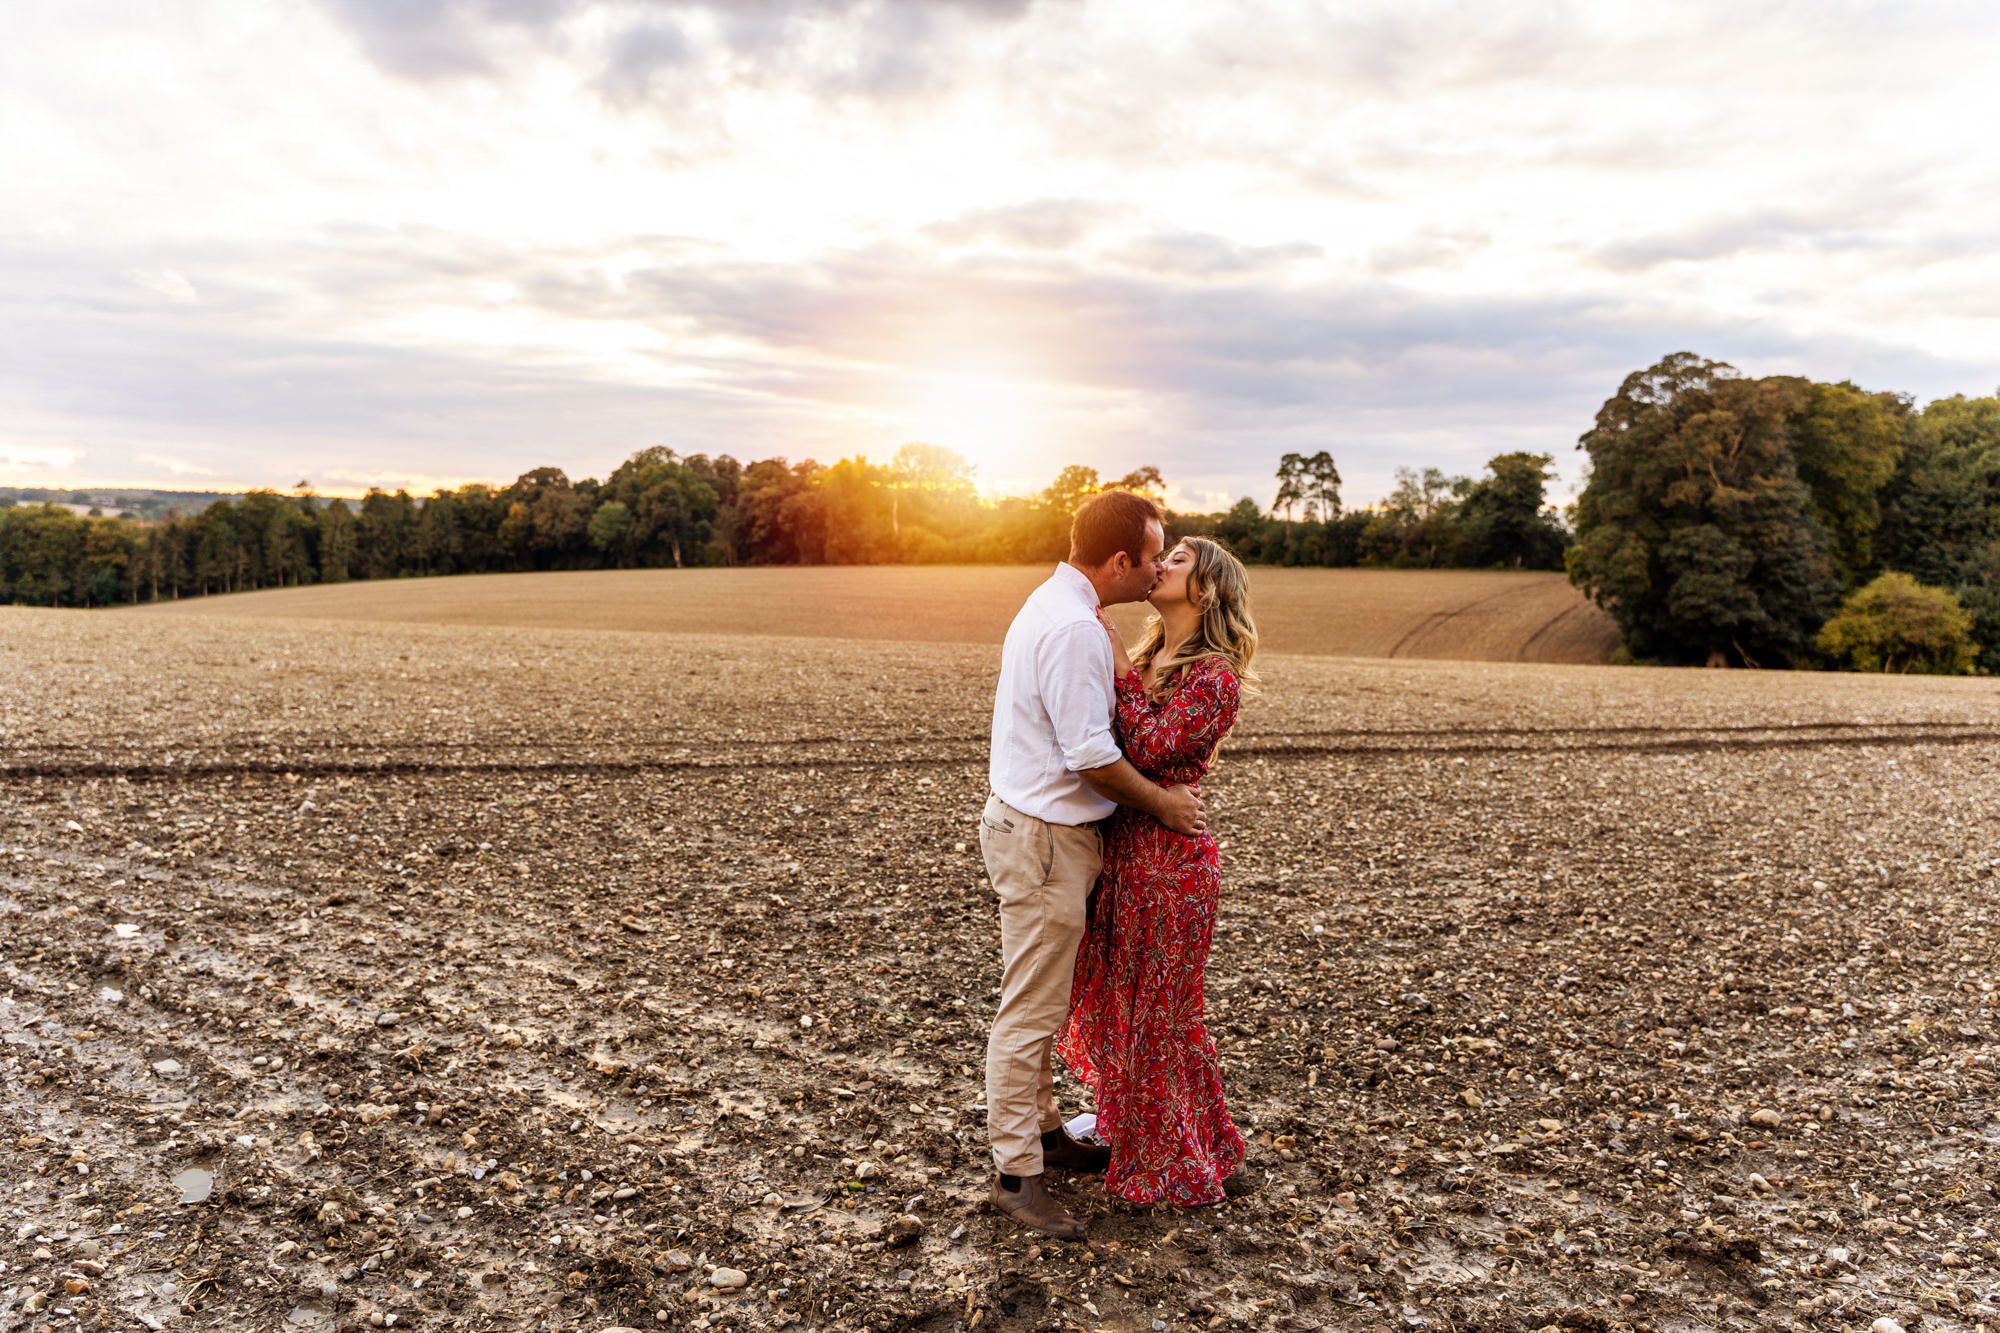 Romantic countryside proposal shoot.